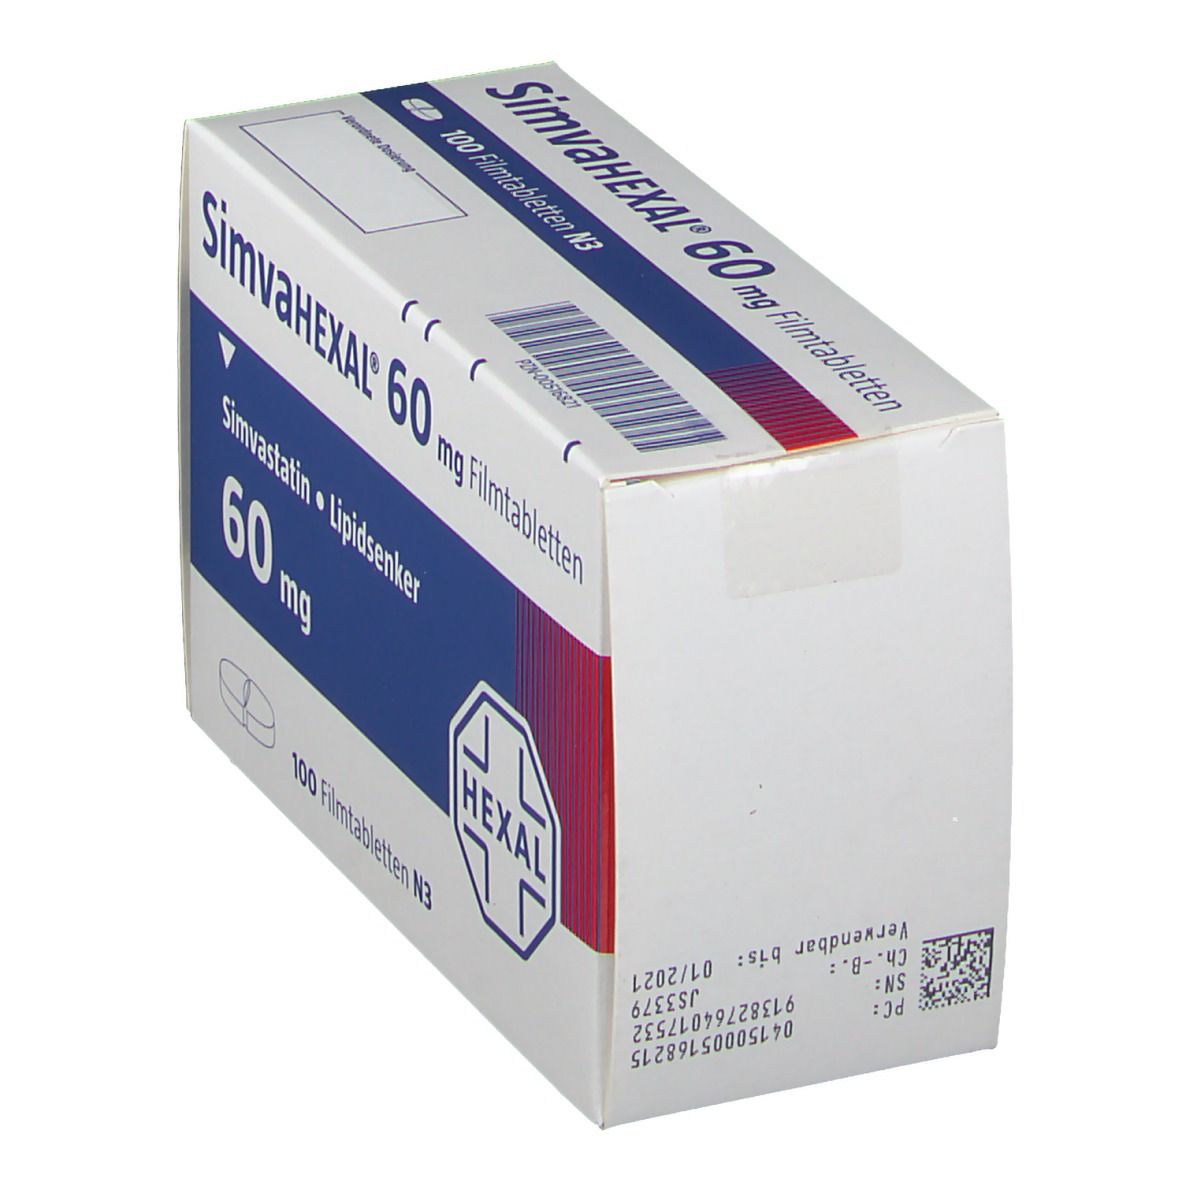 SimvaHEXAL® 60 mg